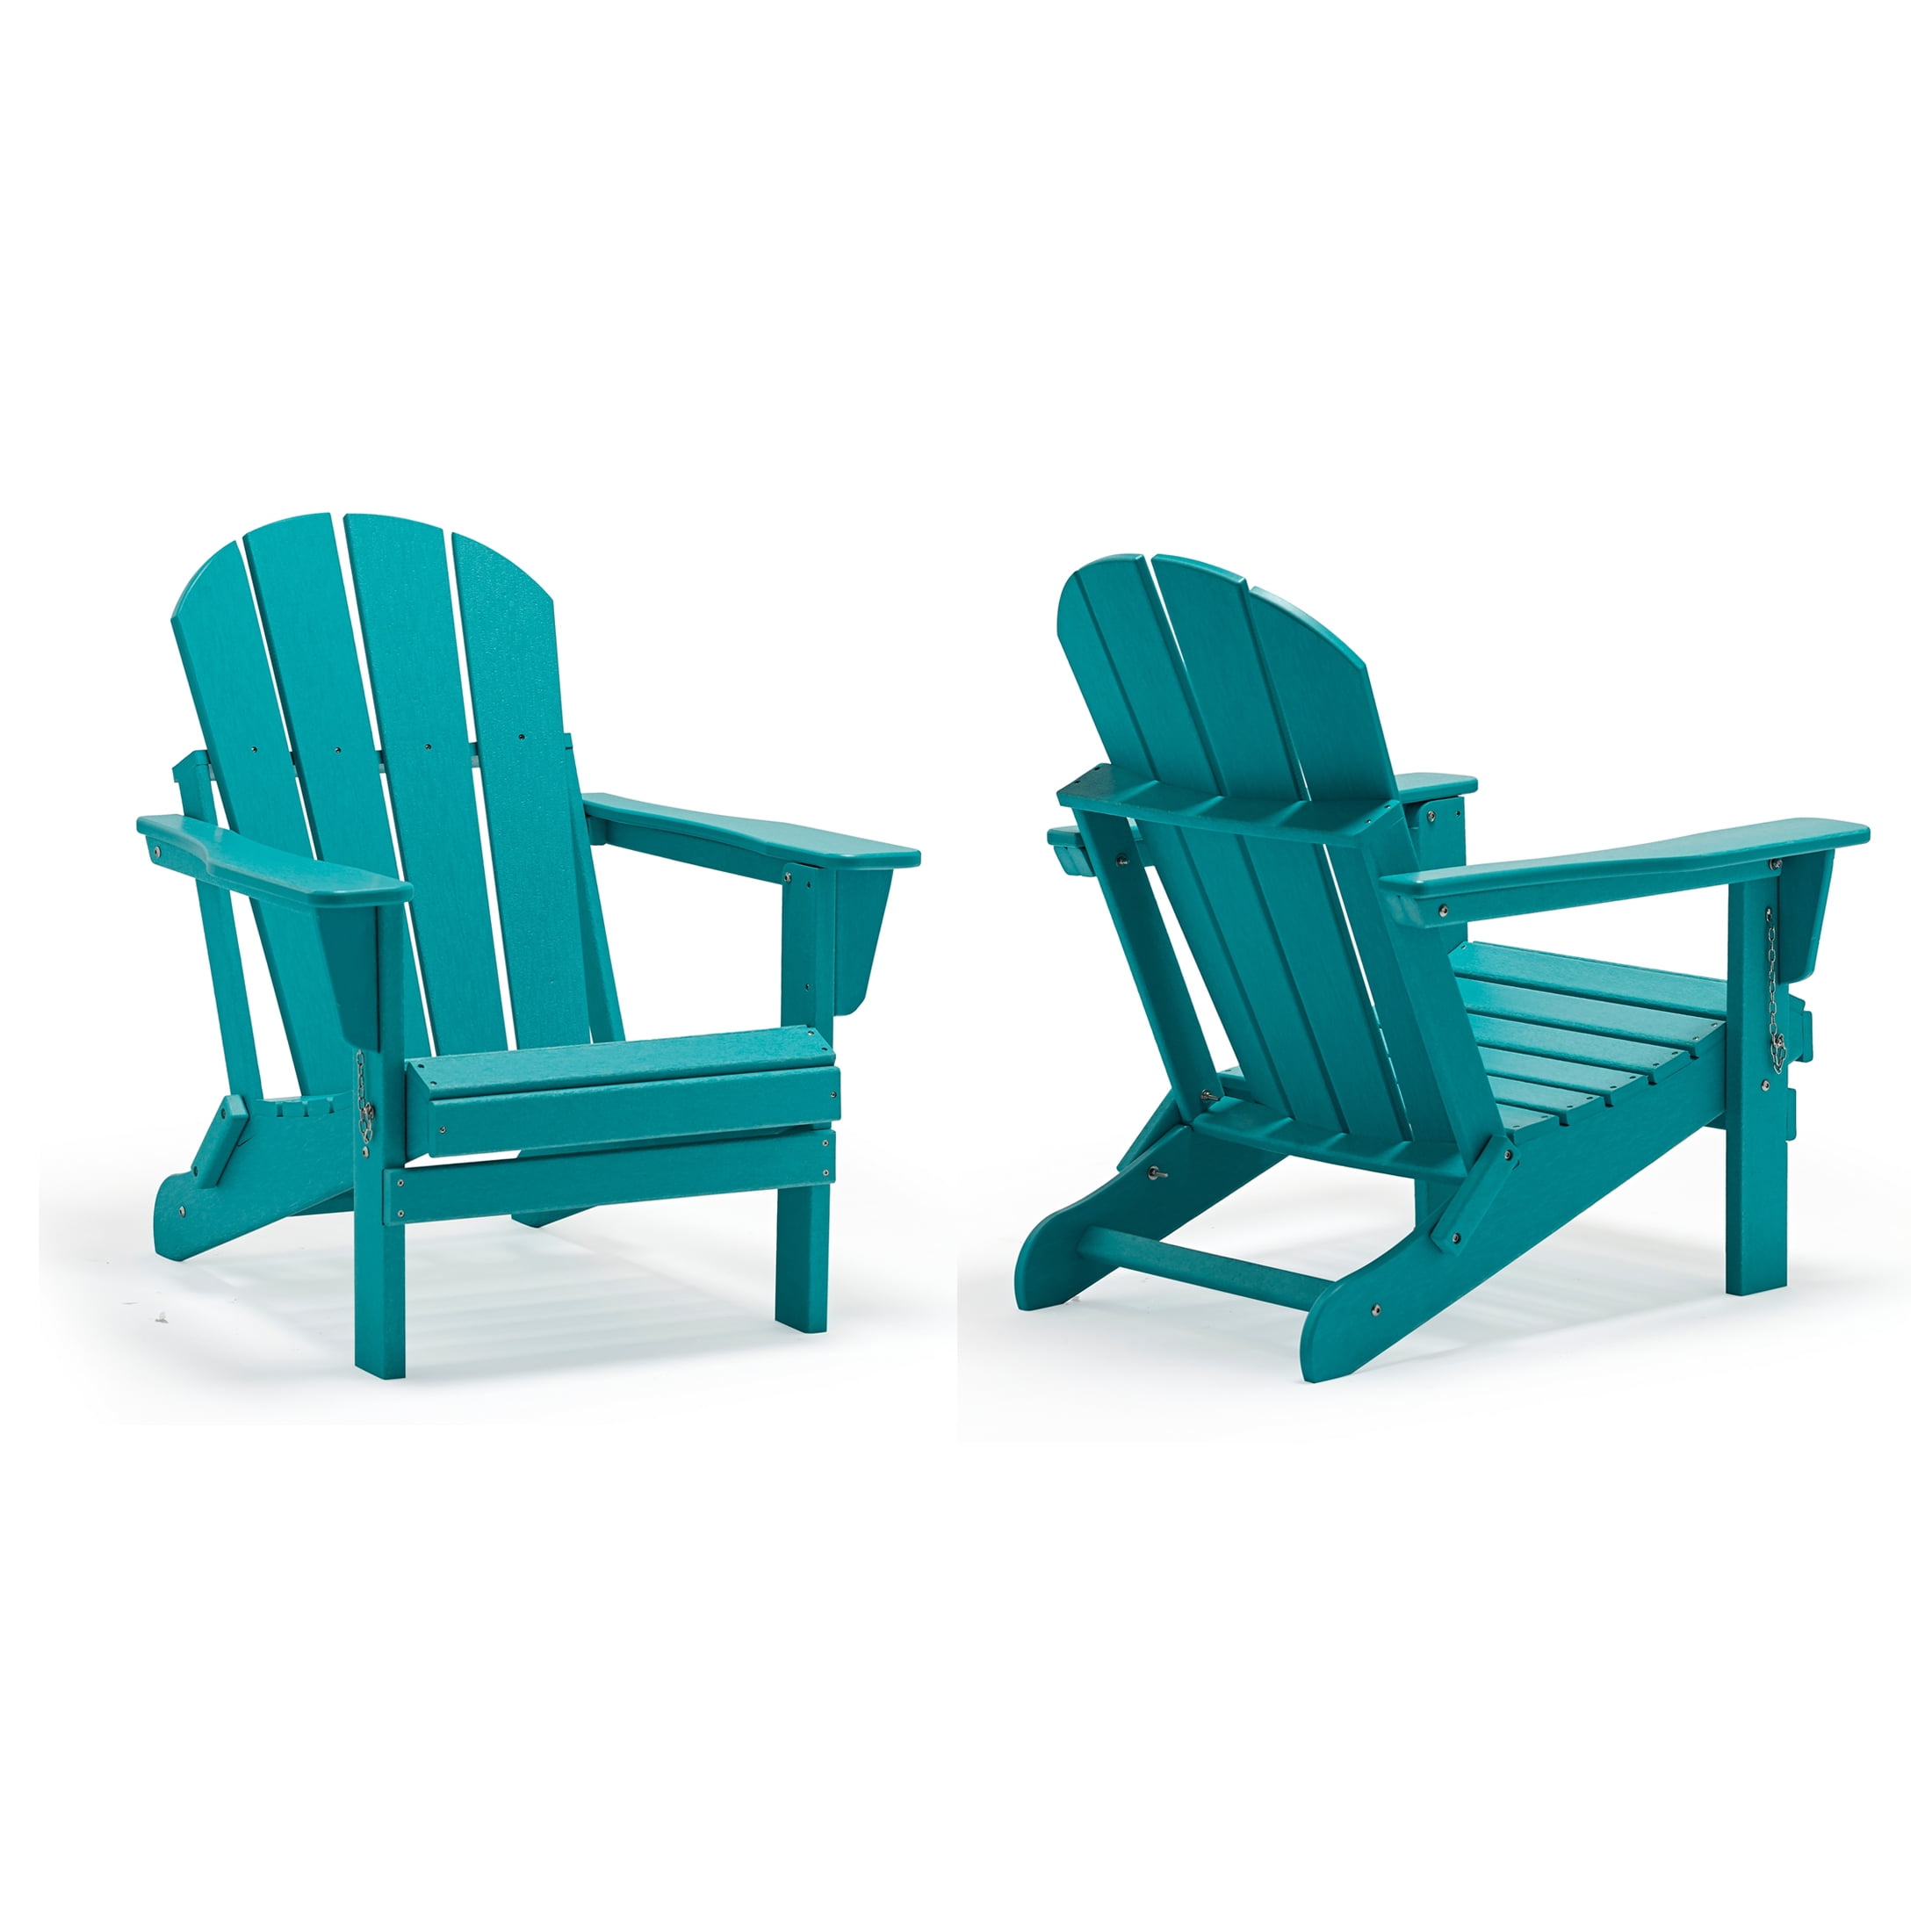 Teal Adirondack Chairs Plastic Amazon Com Recycled